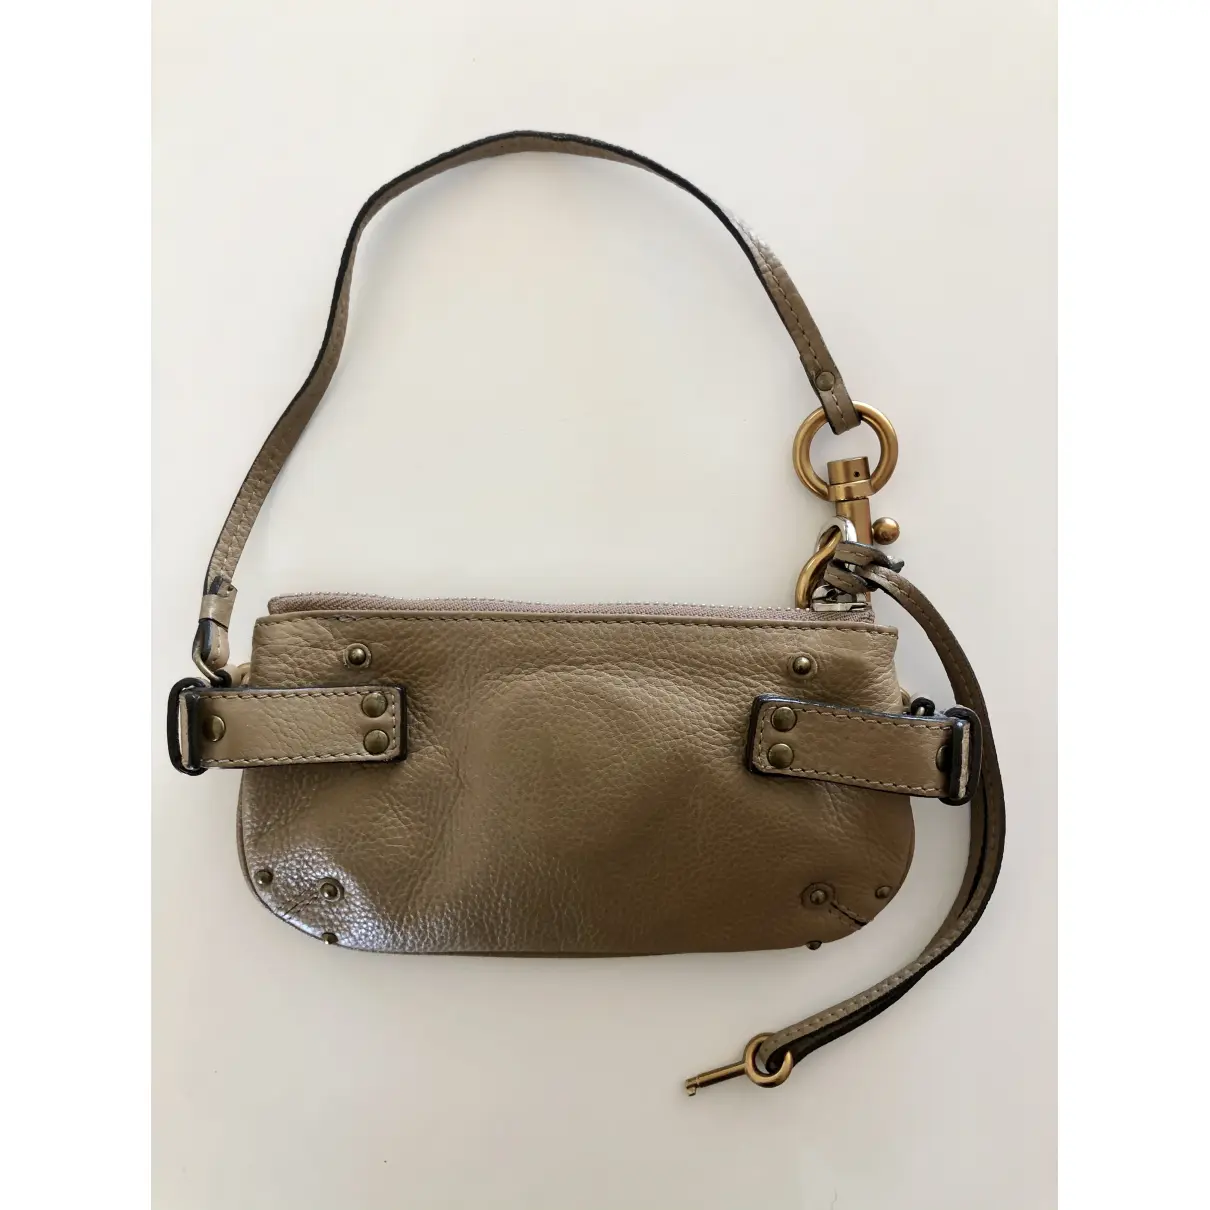 Buy Chloé Paddington leather clutch bag online